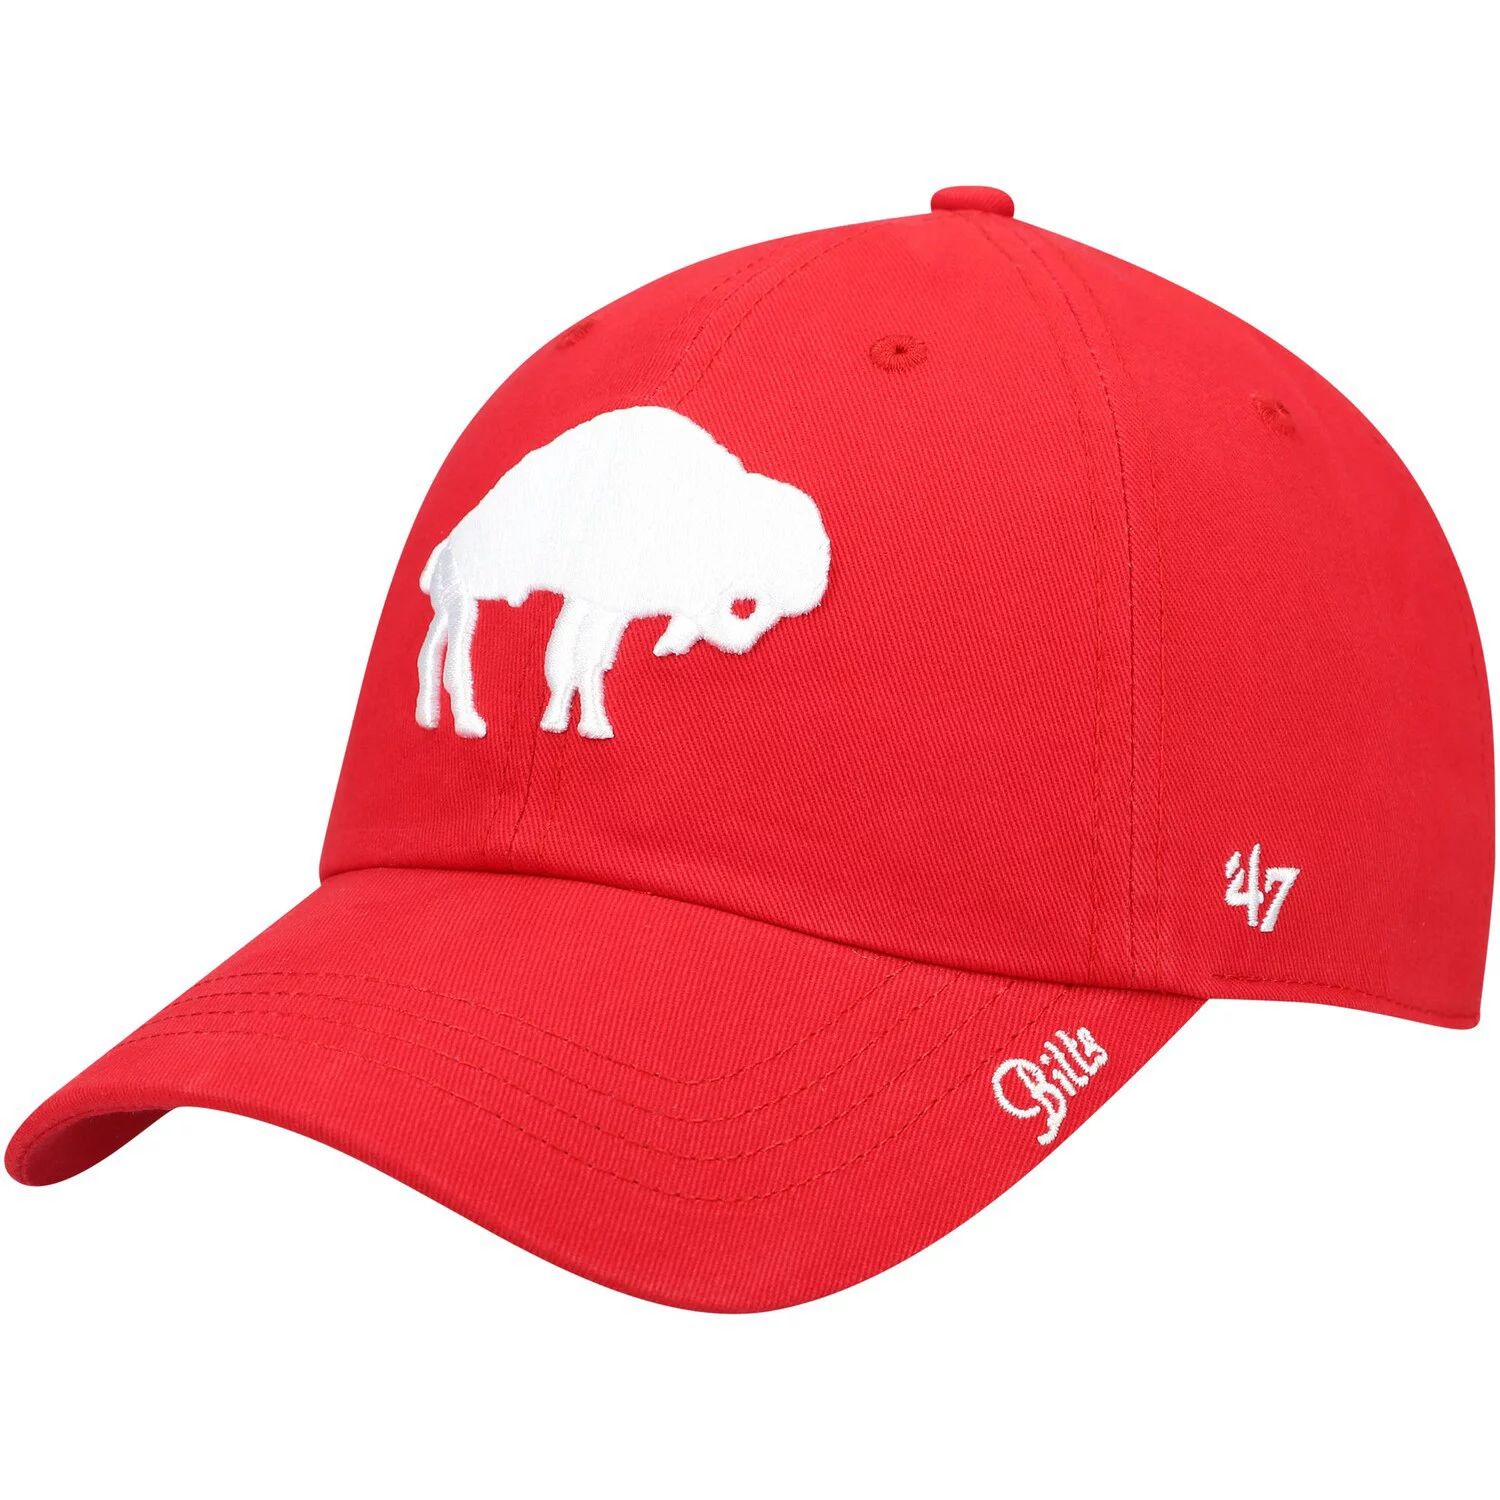 Red hat 4. Кепка Buffalo. Red hat. M M красный с шлчпой. Red hat 6.2.